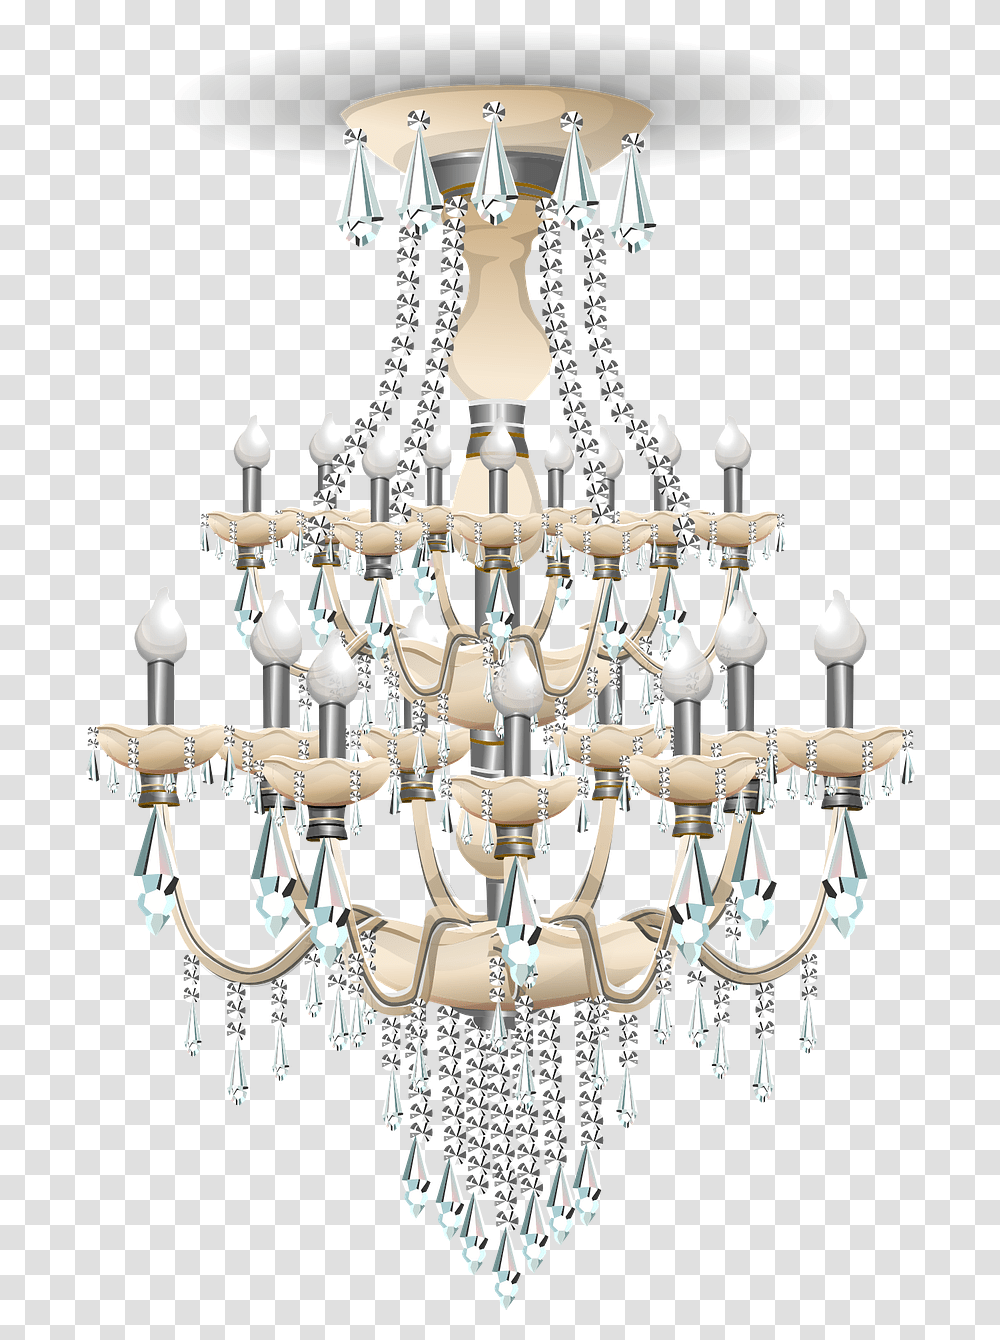 Chandelier Light Lighting Free Vector Graphic On Pixabay Background Chandelier, Lamp, Crystal Transparent Png